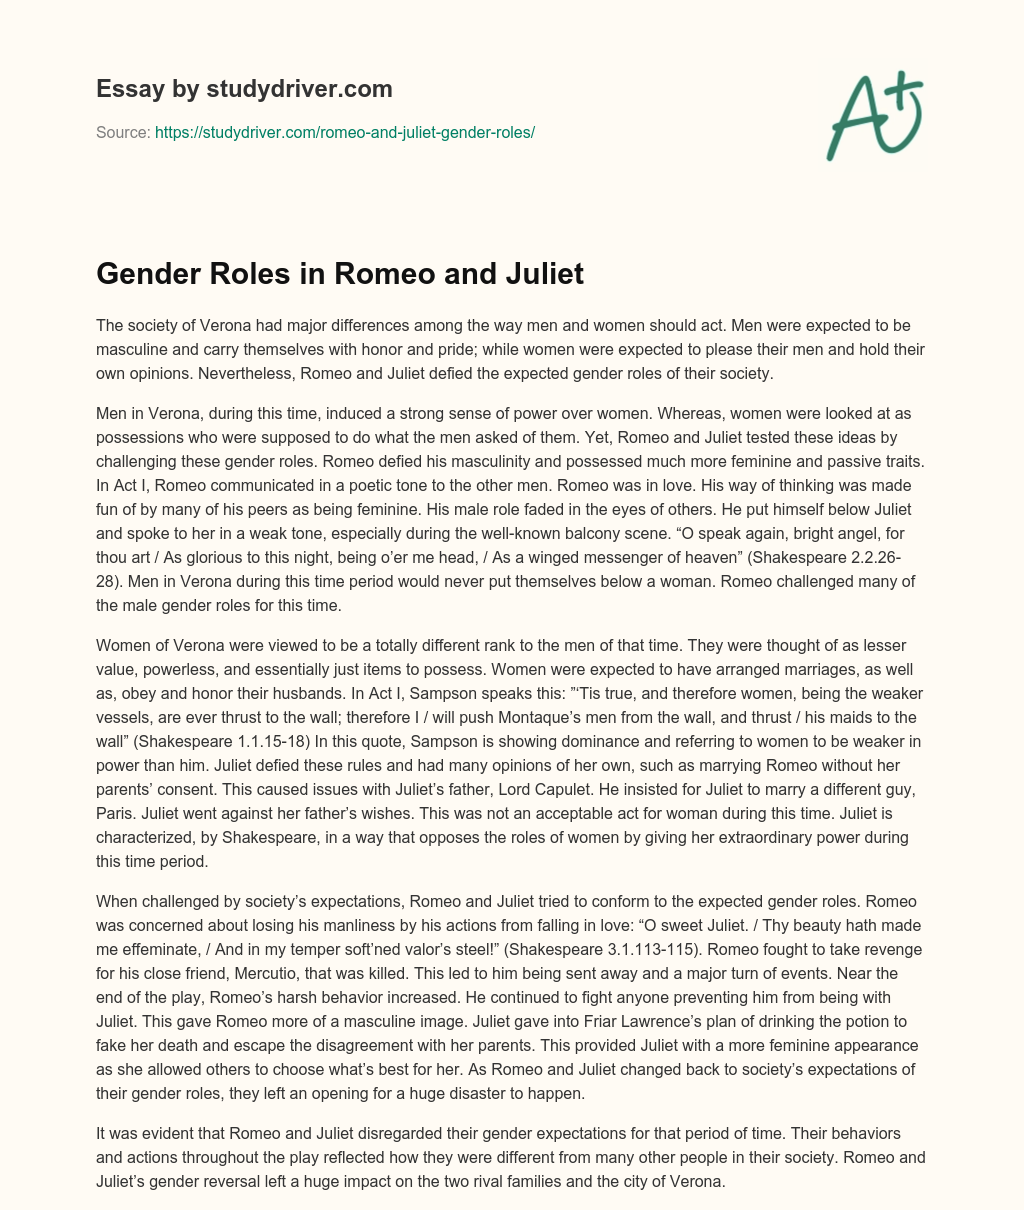 Gender Roles in Romeo and Juliet essay